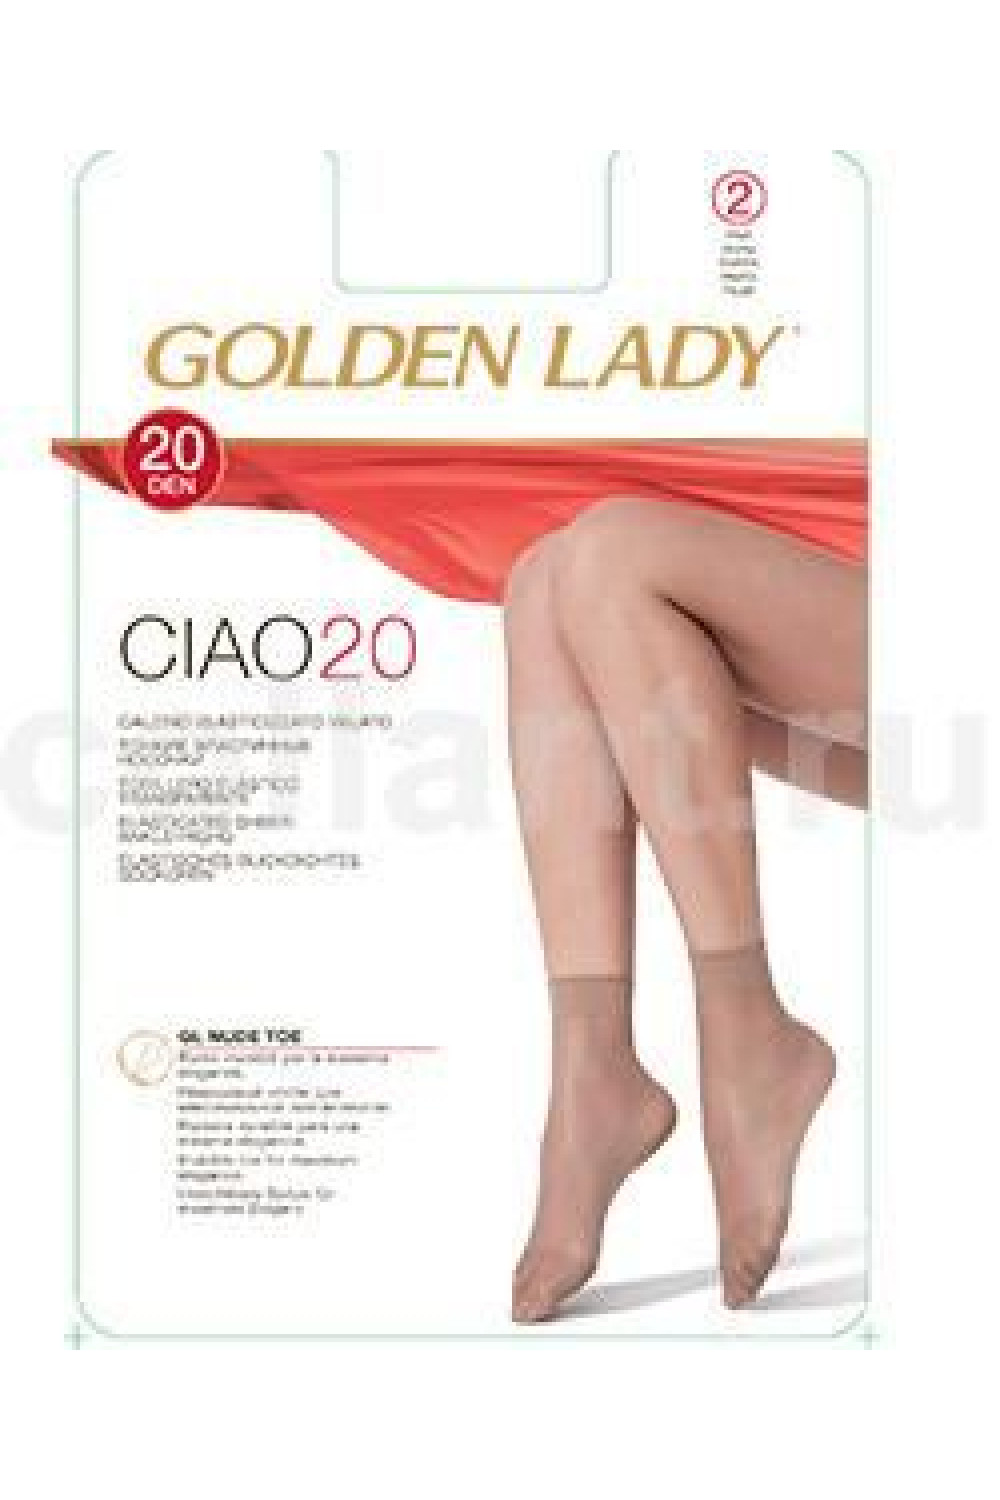 Calz.CIAO 20 NEW (200/10) носки (2 пары)***